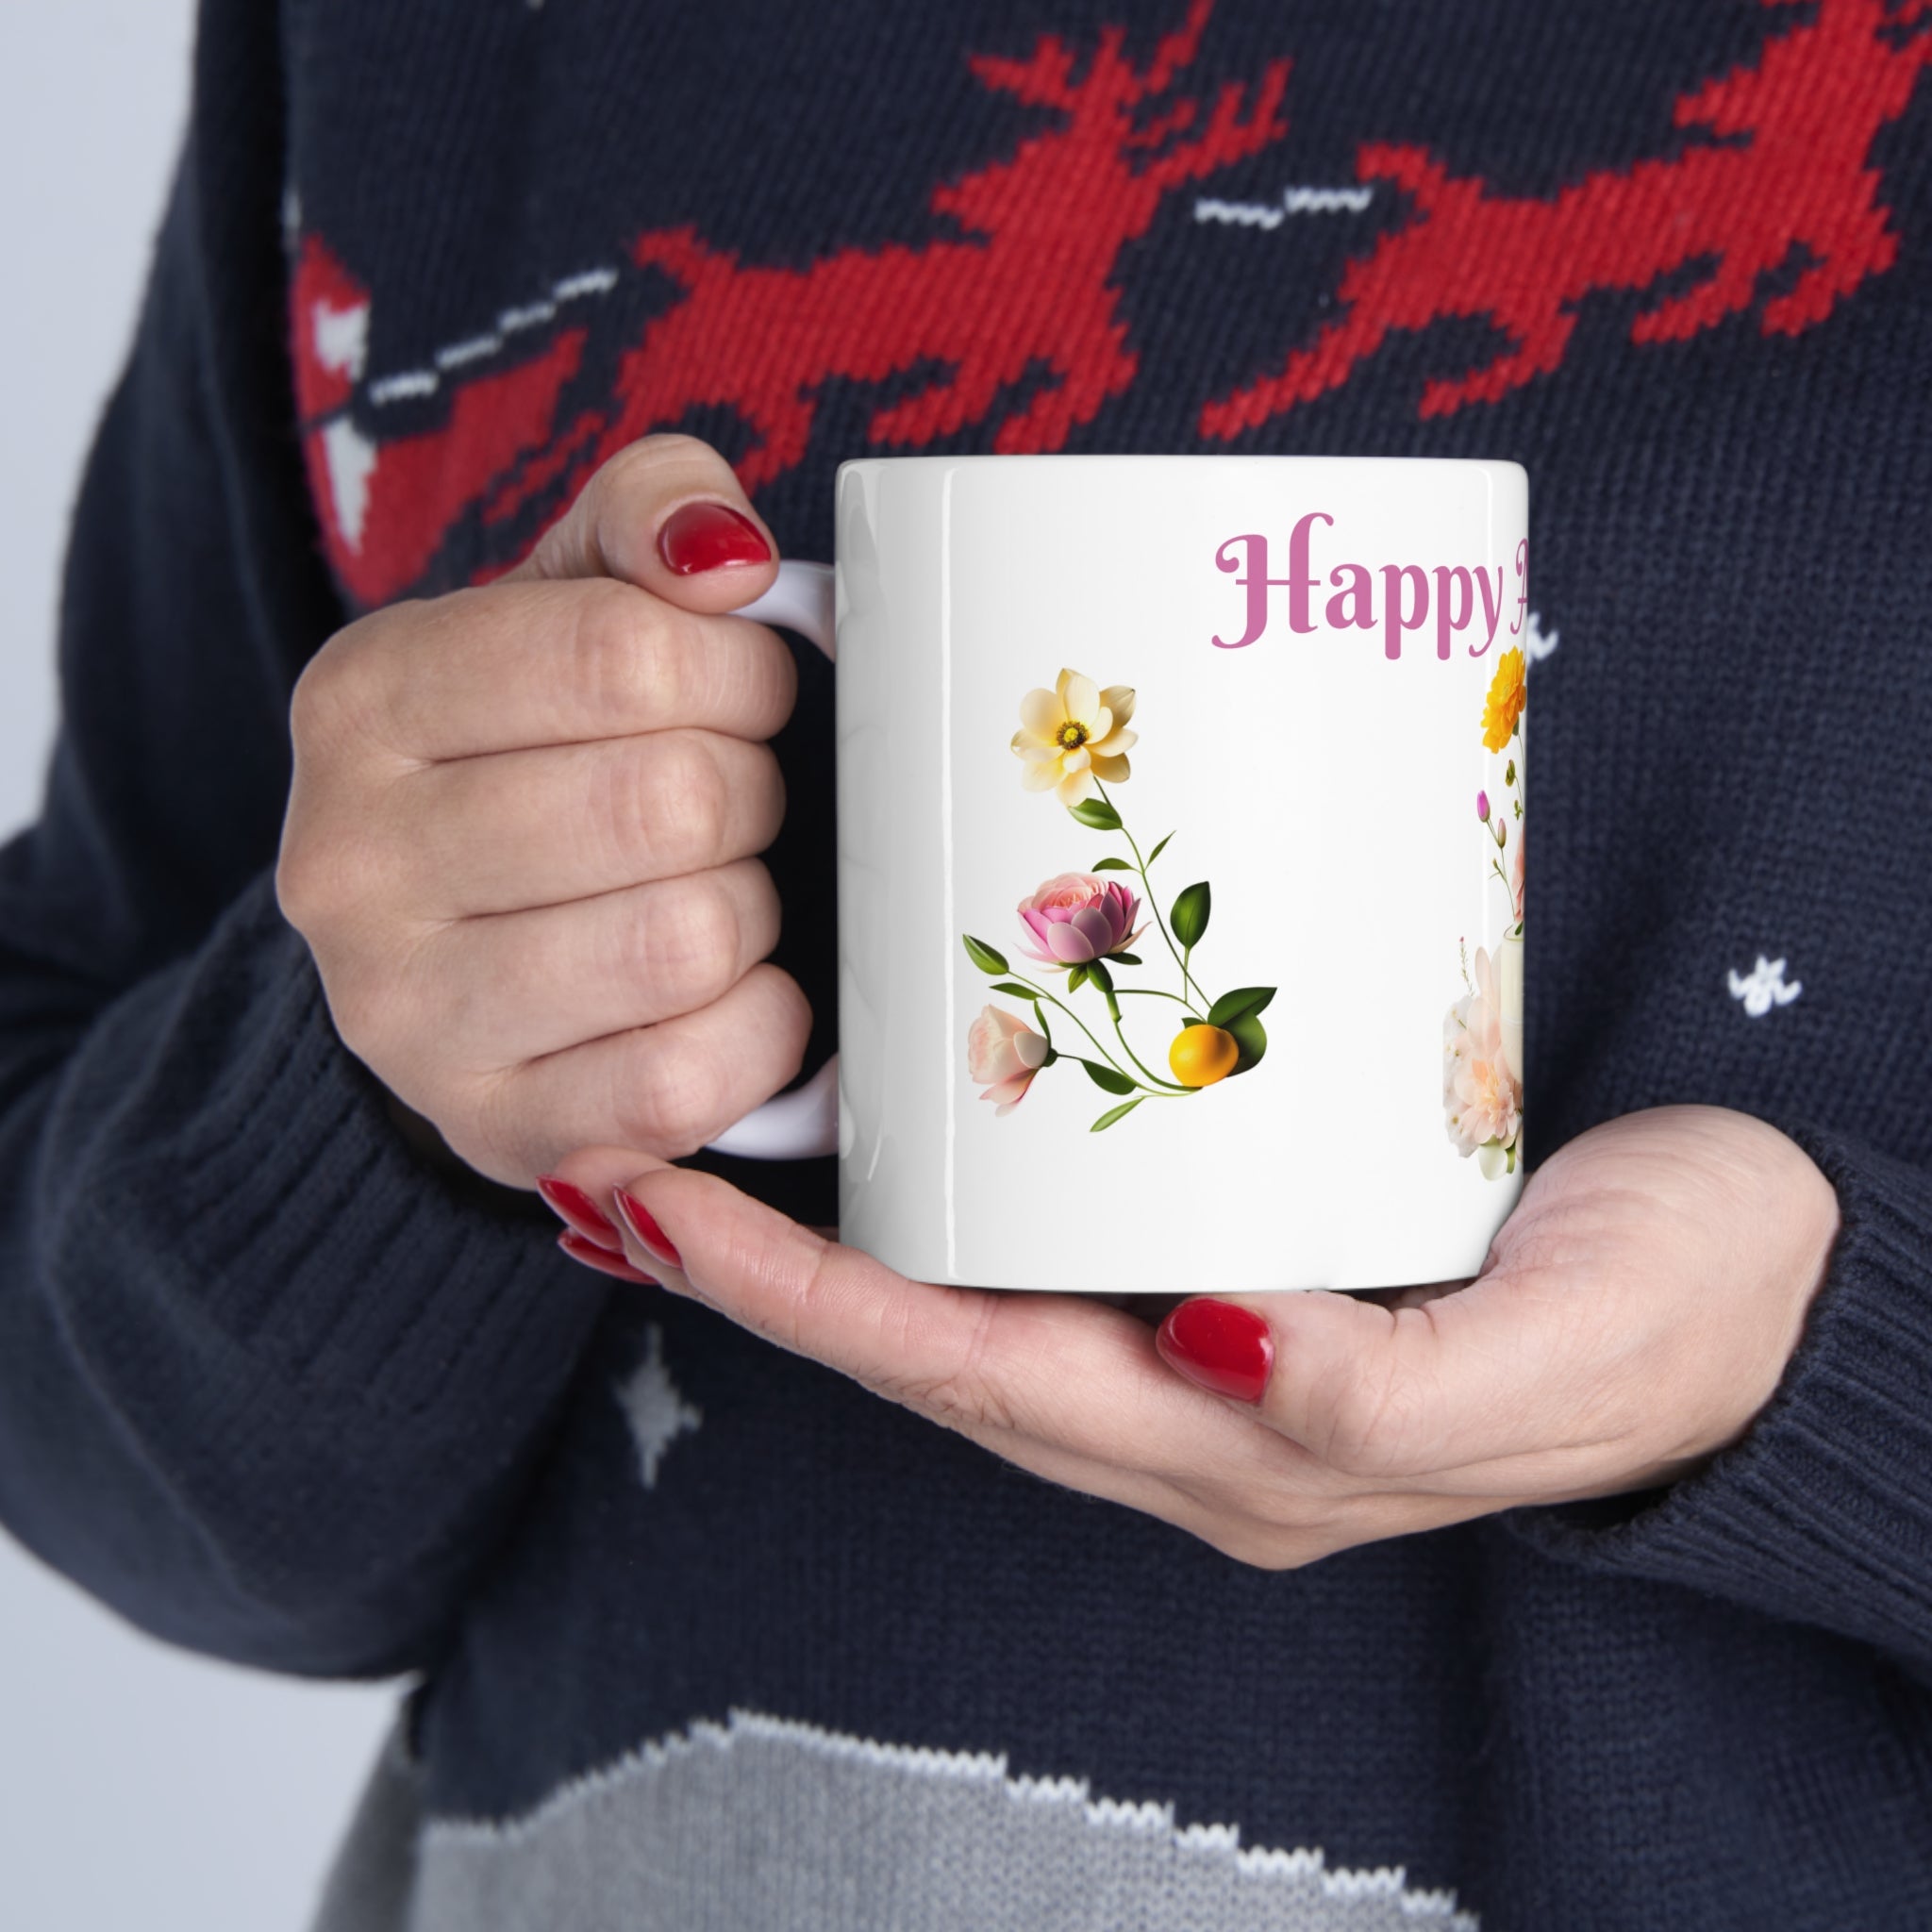 11oz floral anniversary mug, ceramic gift, coffee cup, love bird design, cake decor cake pattern, romantic gift" unique love bird gift